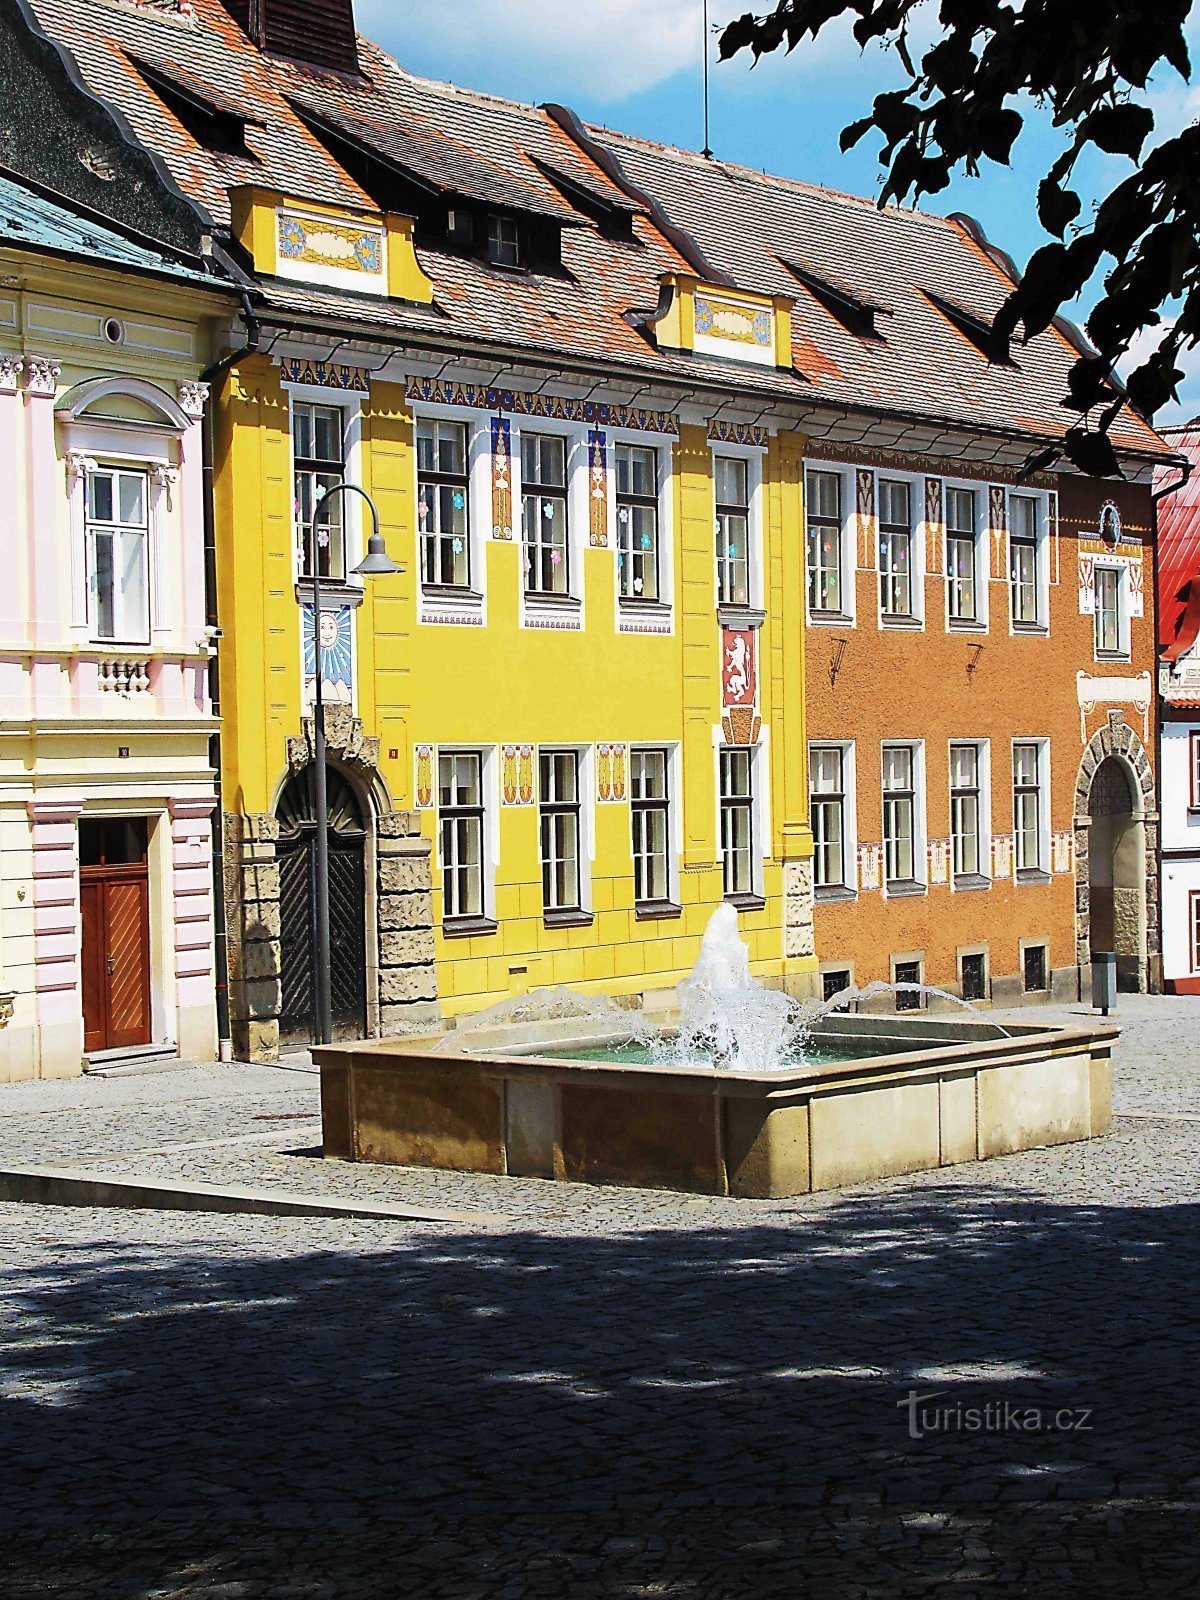 Municipal school - historical building in Opočno